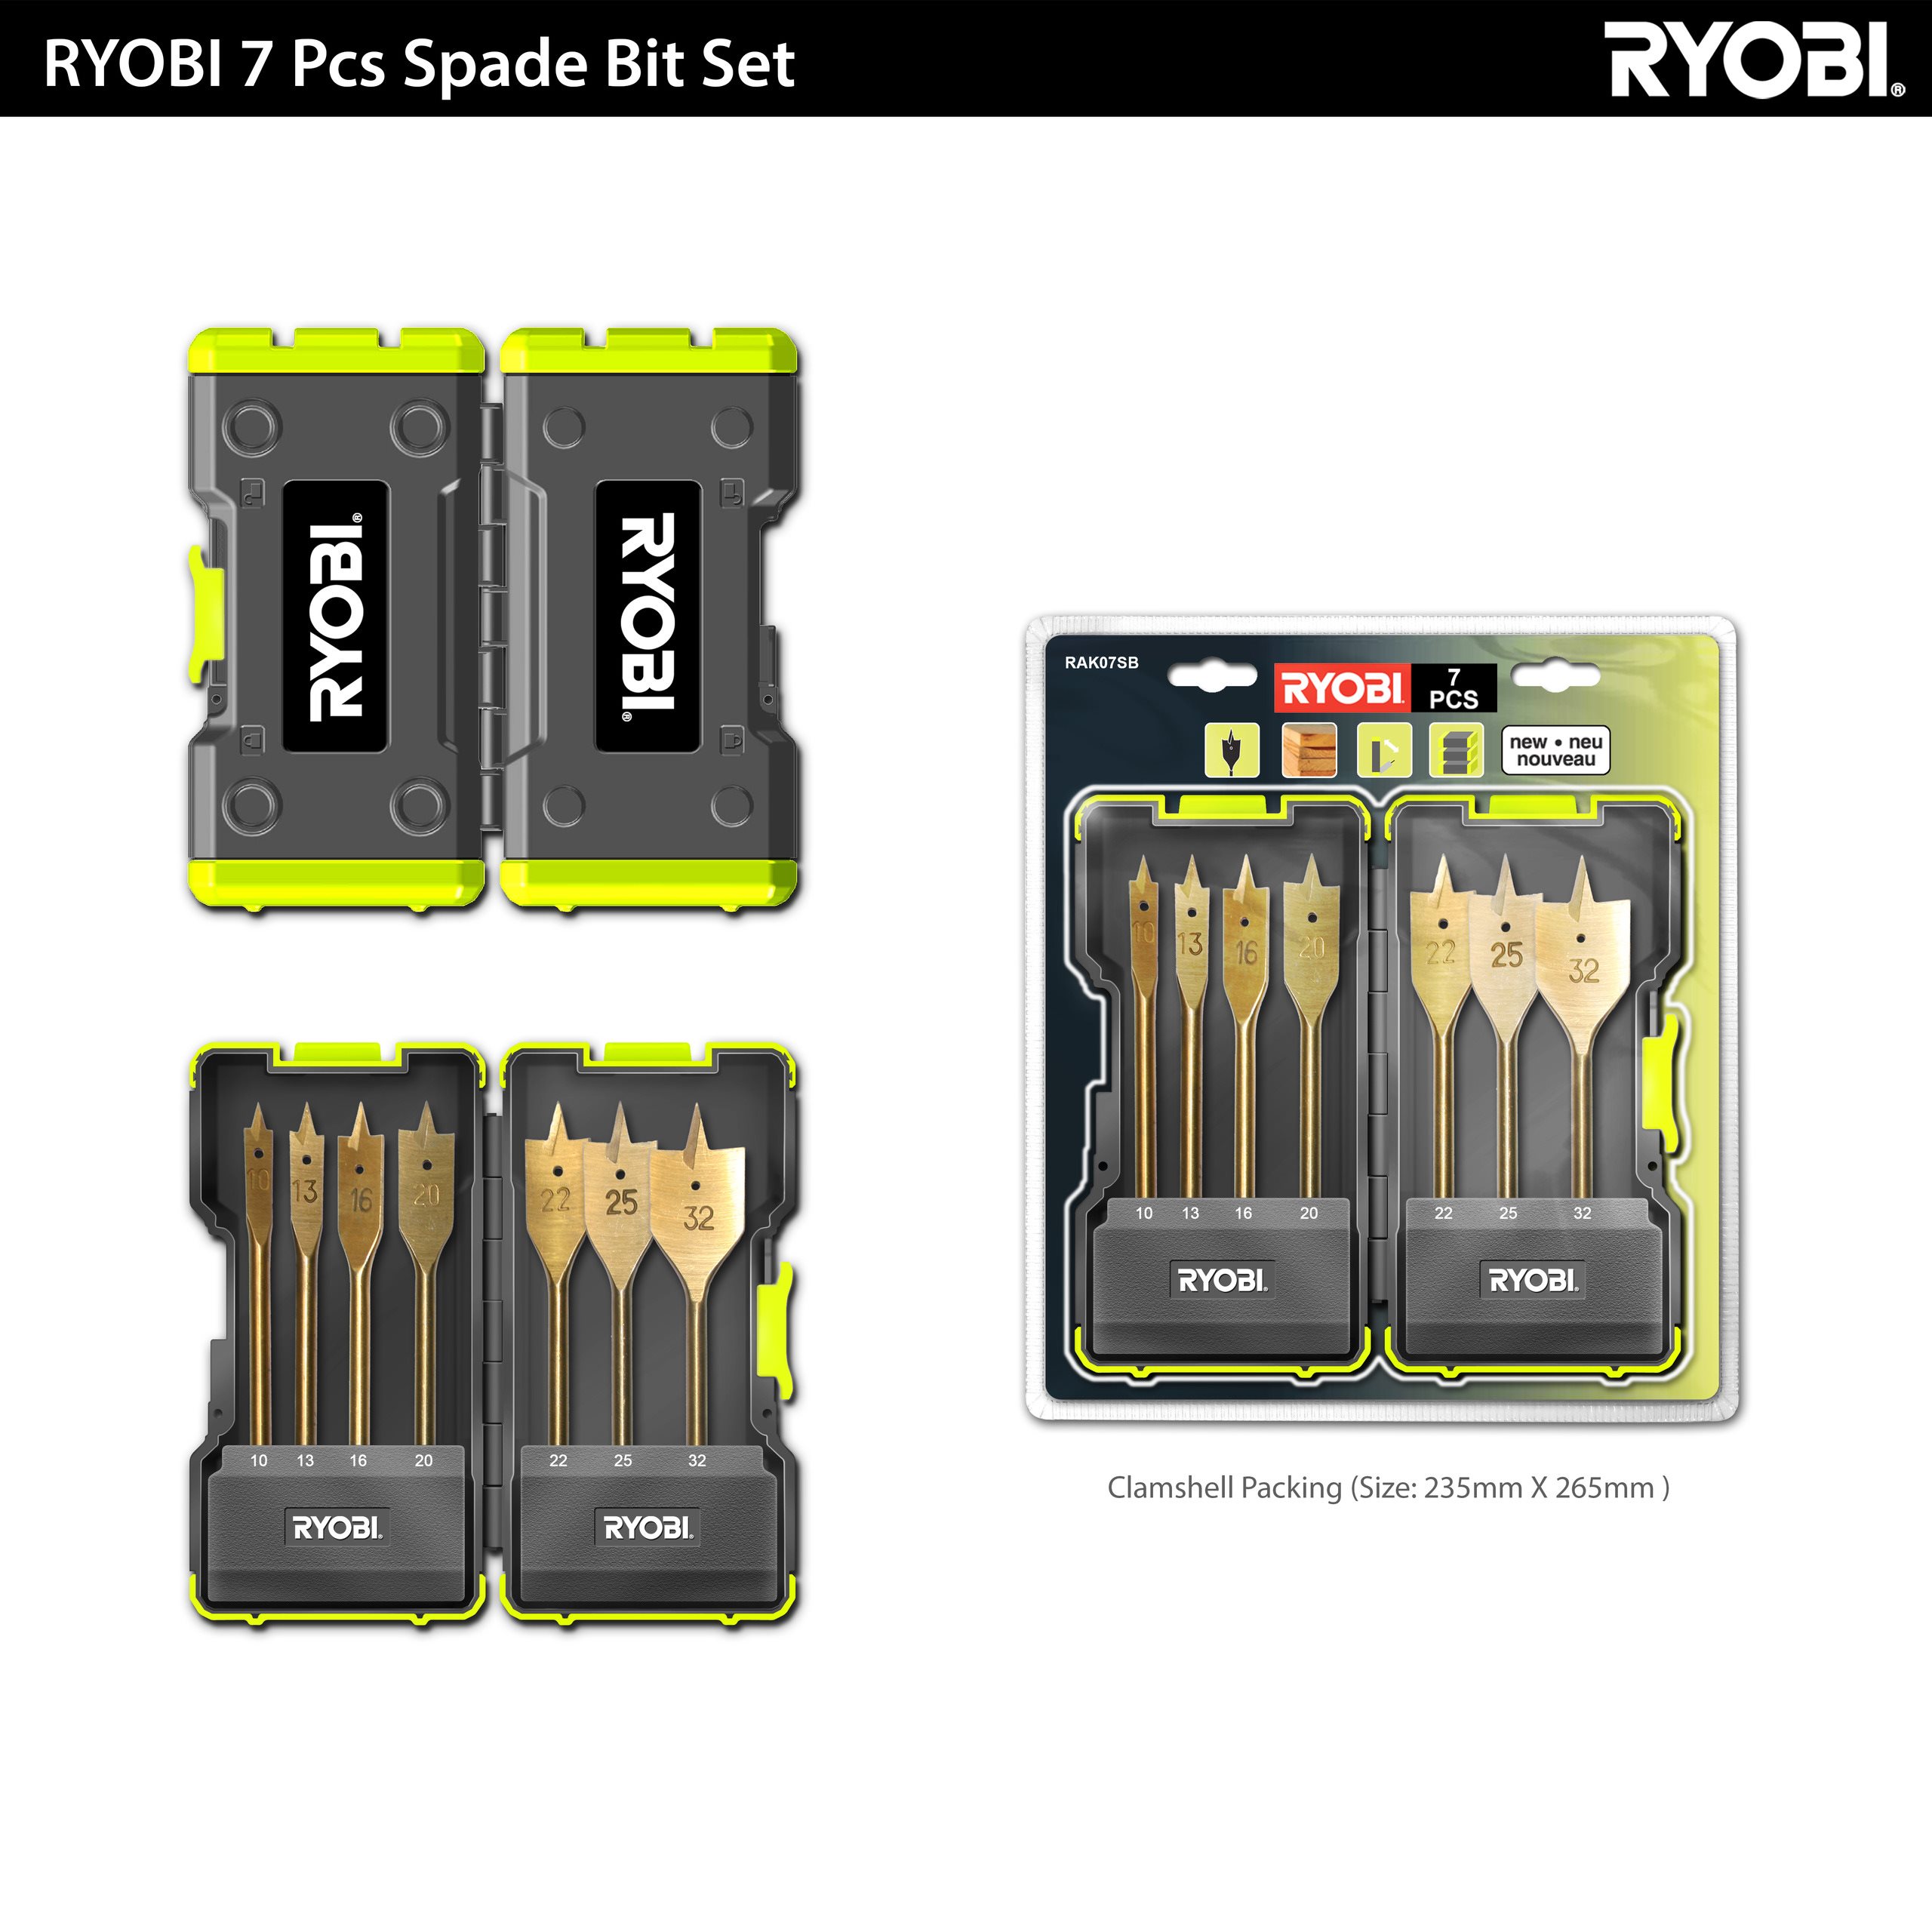 Spade Bit Set 7 piece)| Spade Drill Bit Set | RYOBI RAK07SB